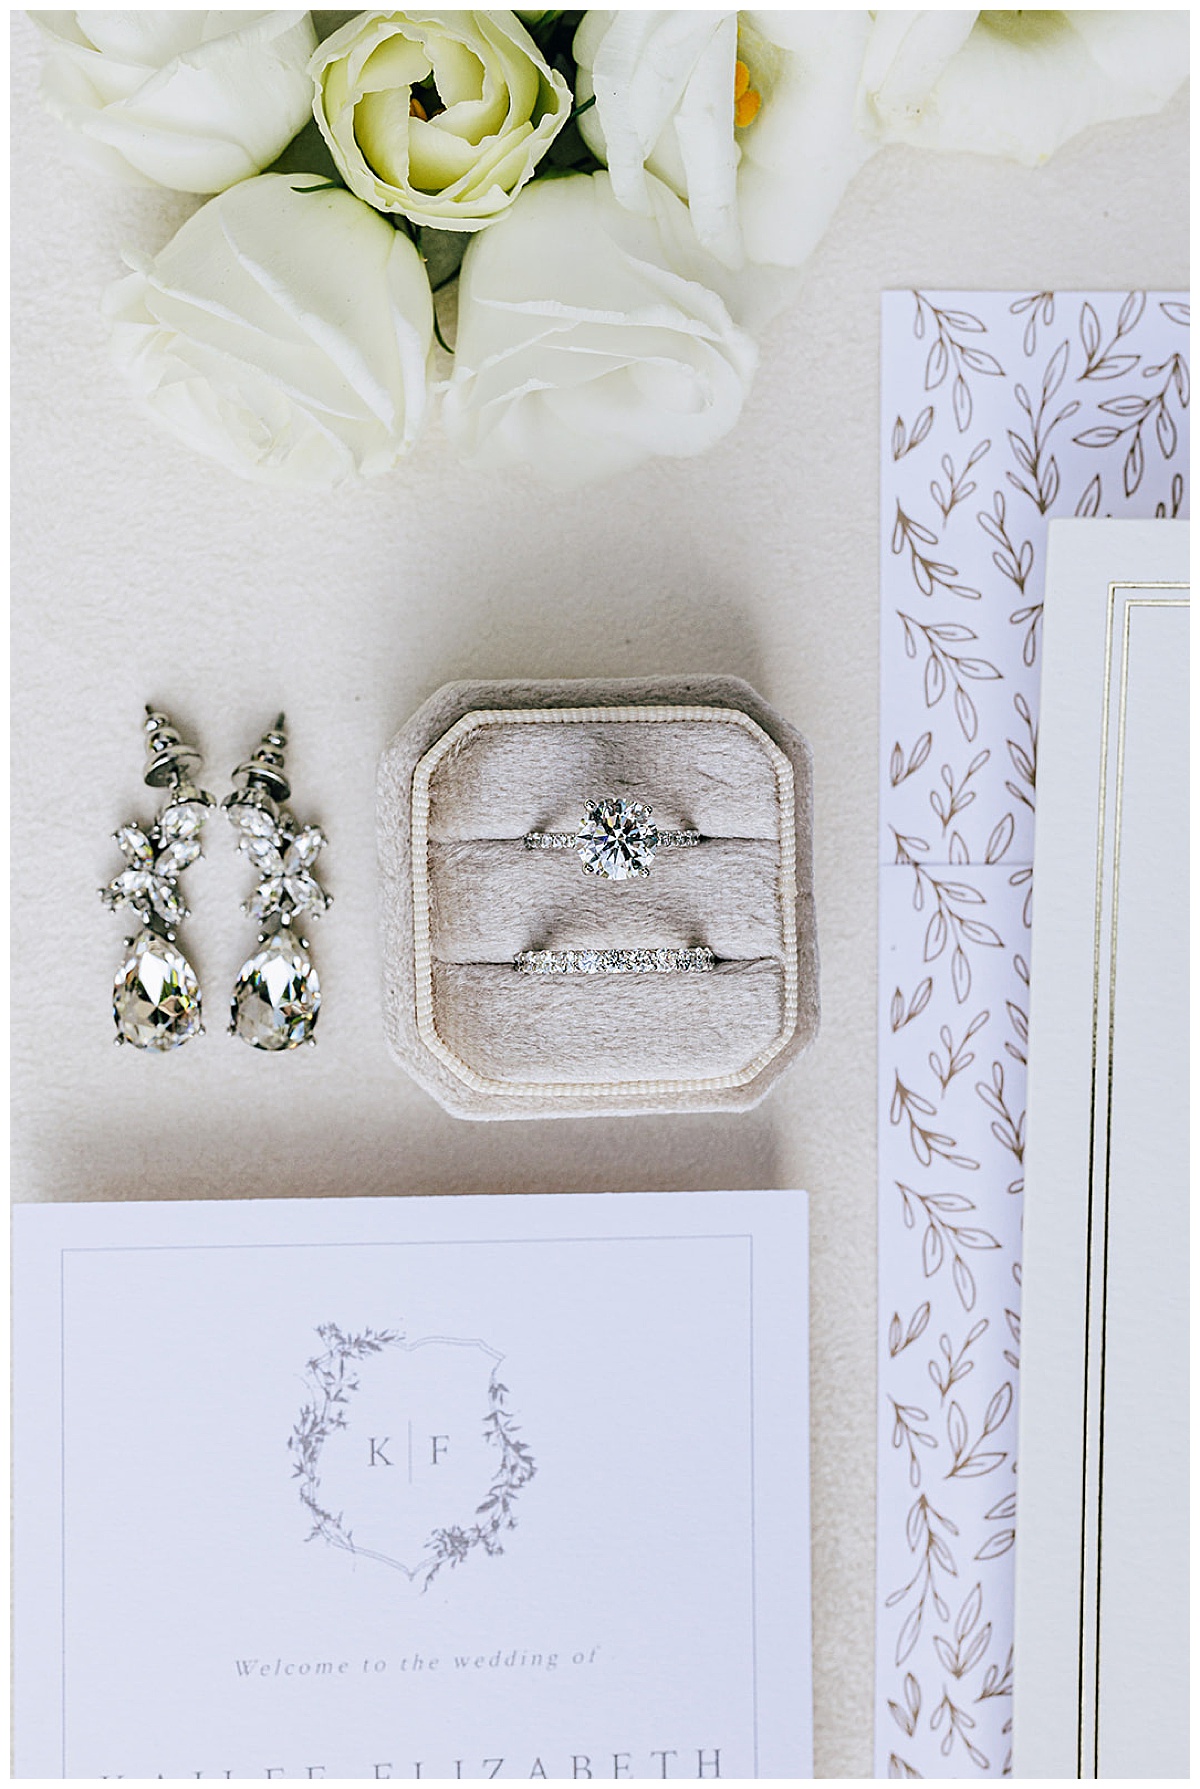 Bridal ring by Kayla Bouren Photography